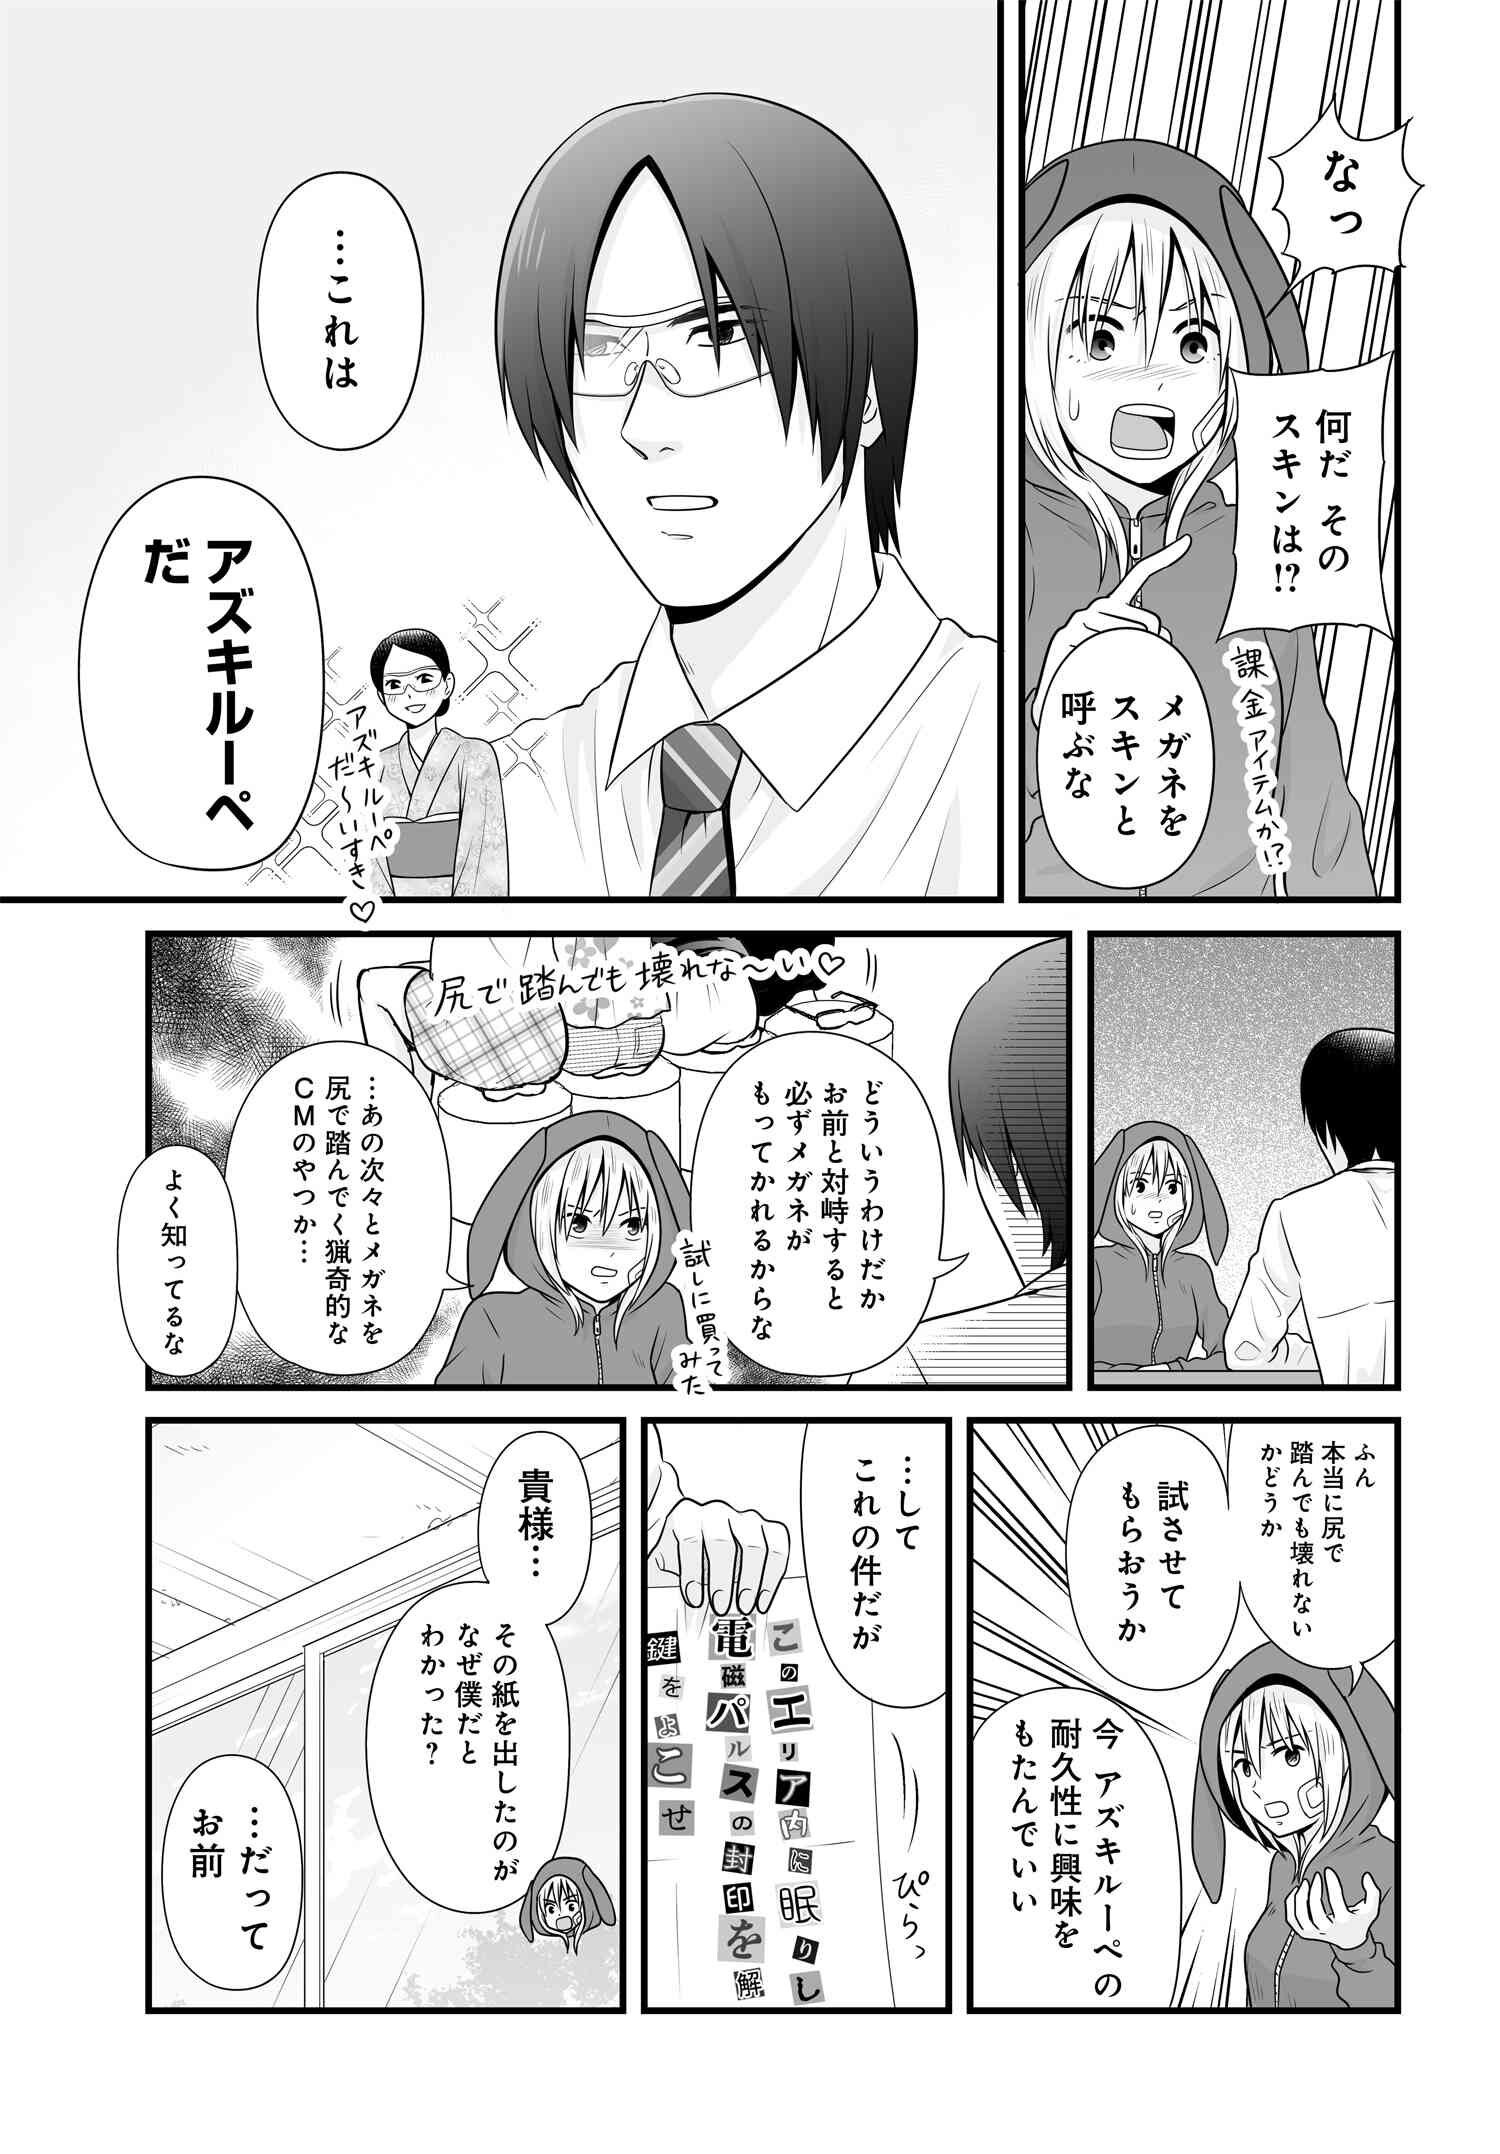 Joshikousei no Mudazukai - Chapter 093 - Page 4